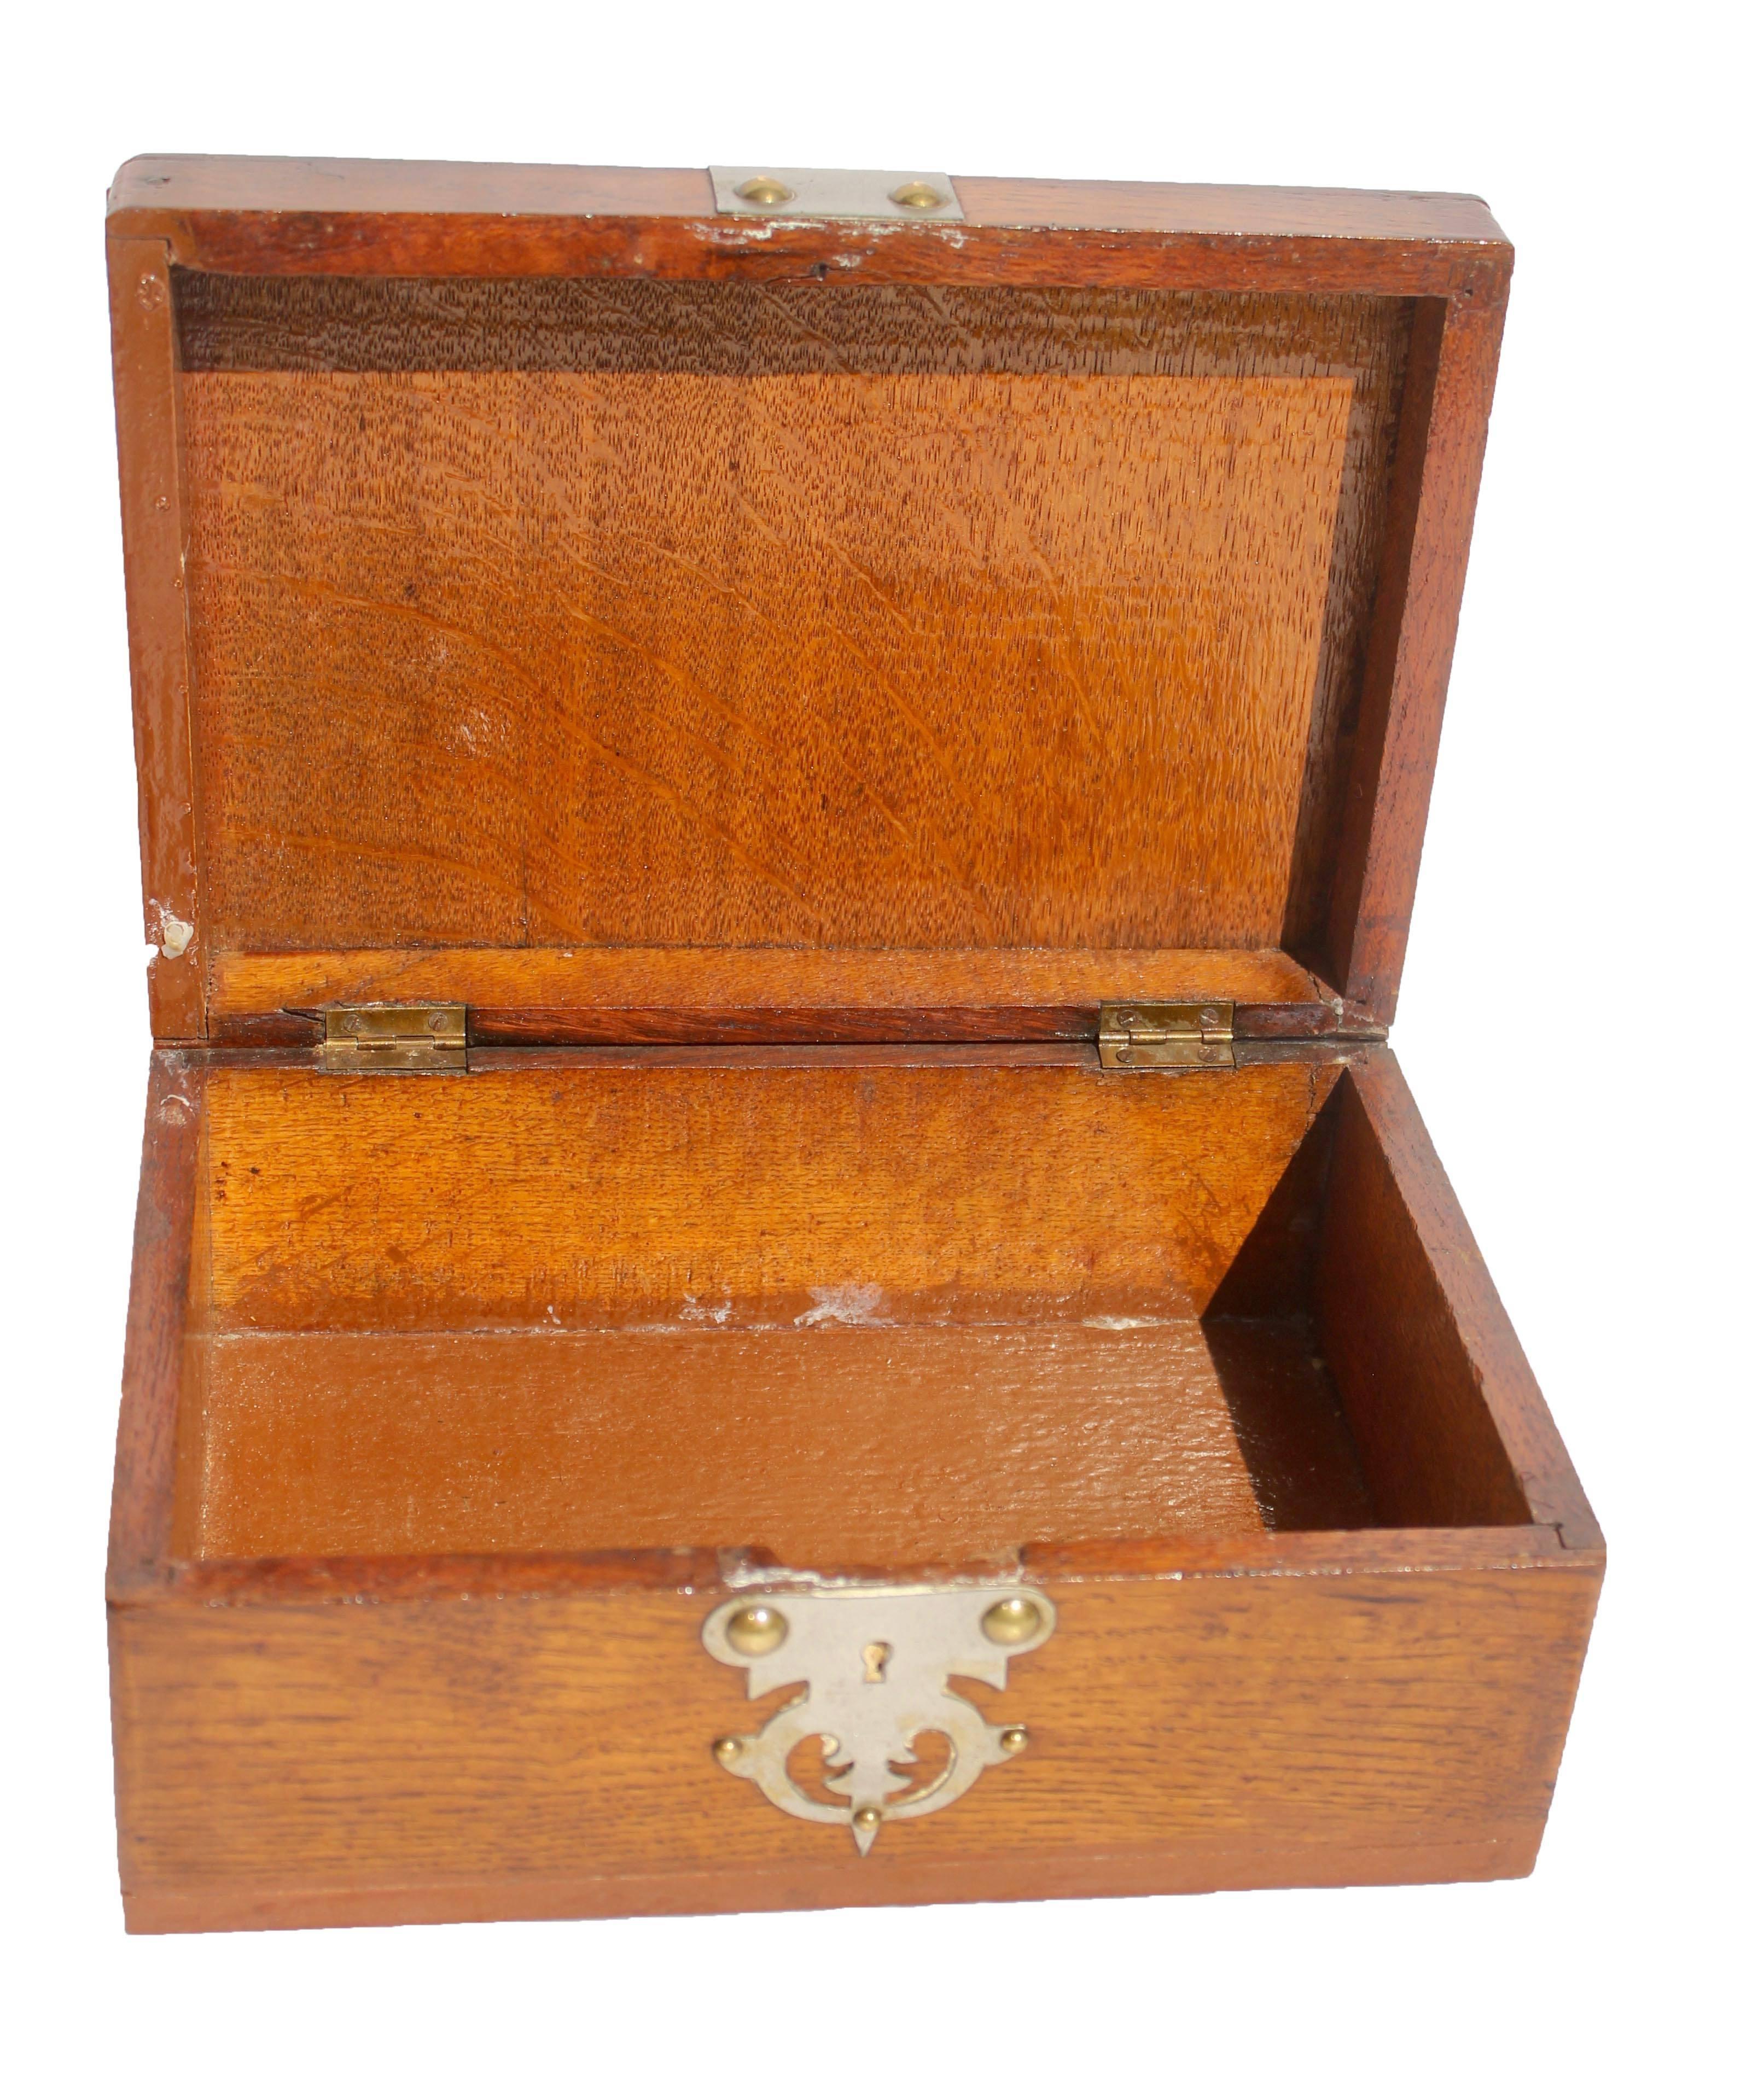 Austrian Solid Oak Arts & Crafts Box with Decorative Metal Work, circa 1890